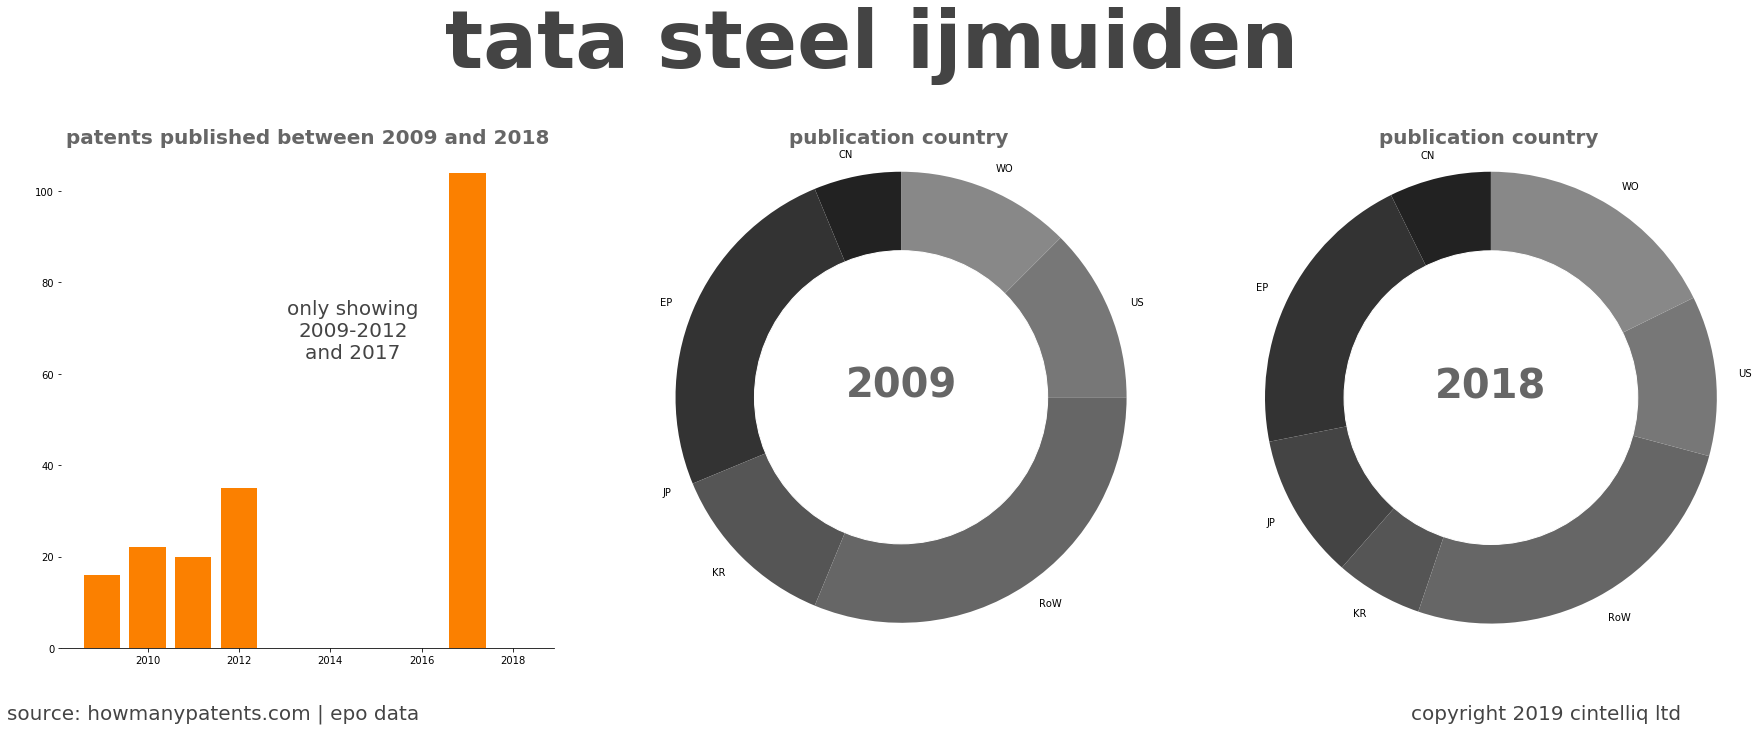 summary of patents for Tata Steel Ijmuiden